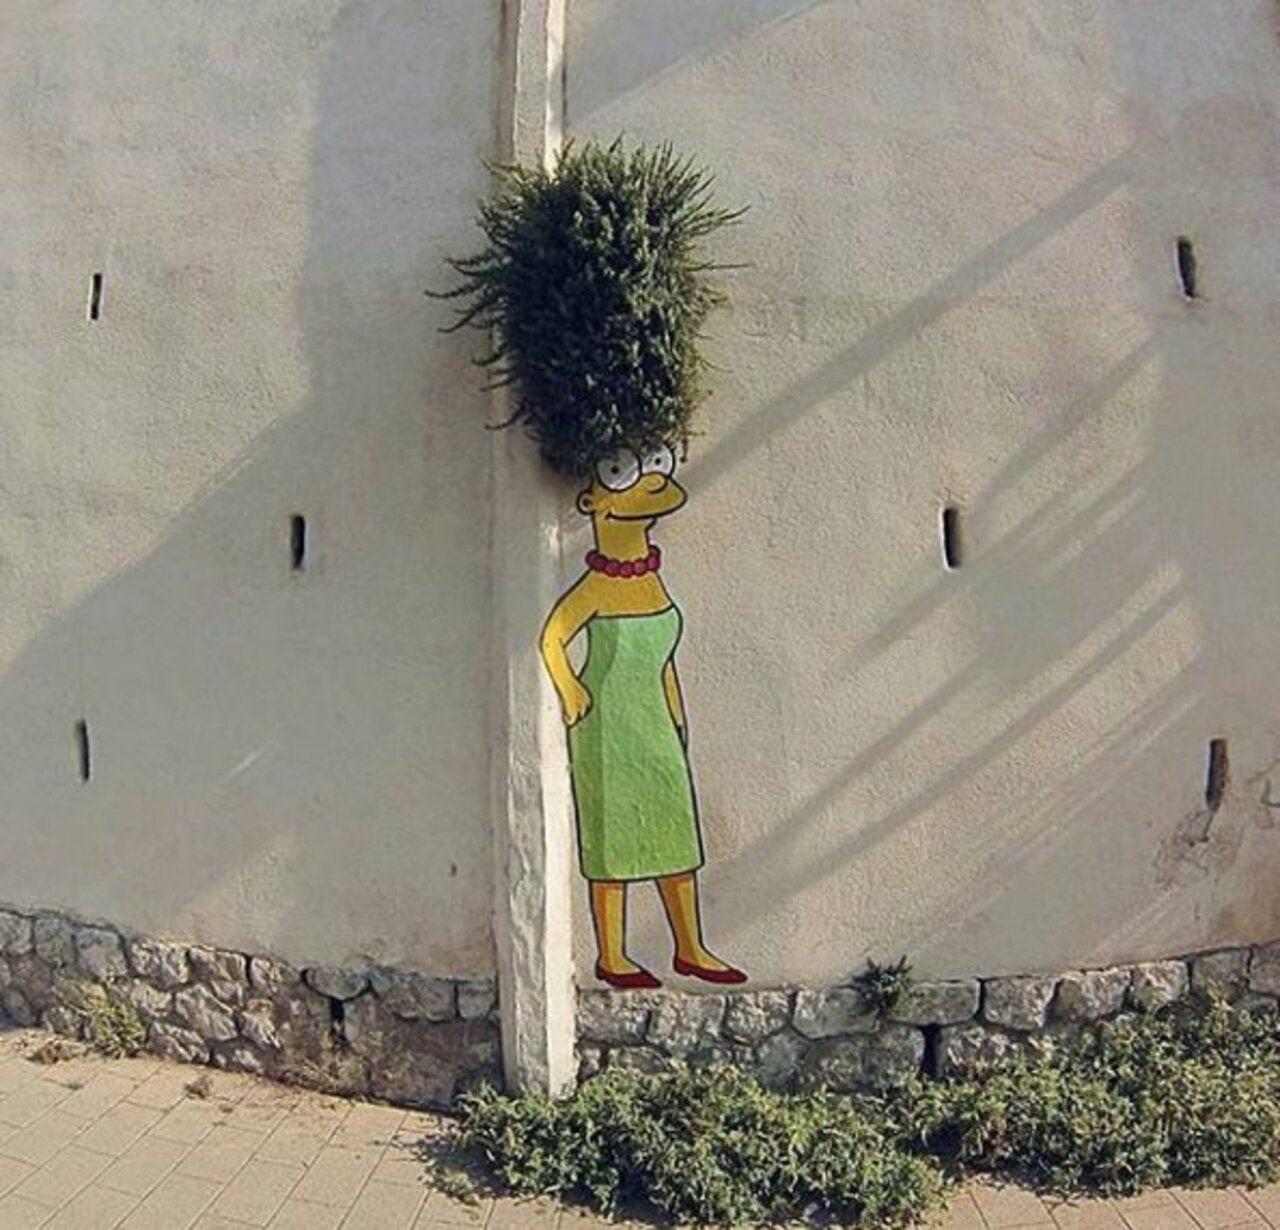 Oooh, Marge, who does your hair? -- Piece by efixworld. -- #globalstreetart #streetart #art #graffiti https://t.co/1oaQ6kRIRS